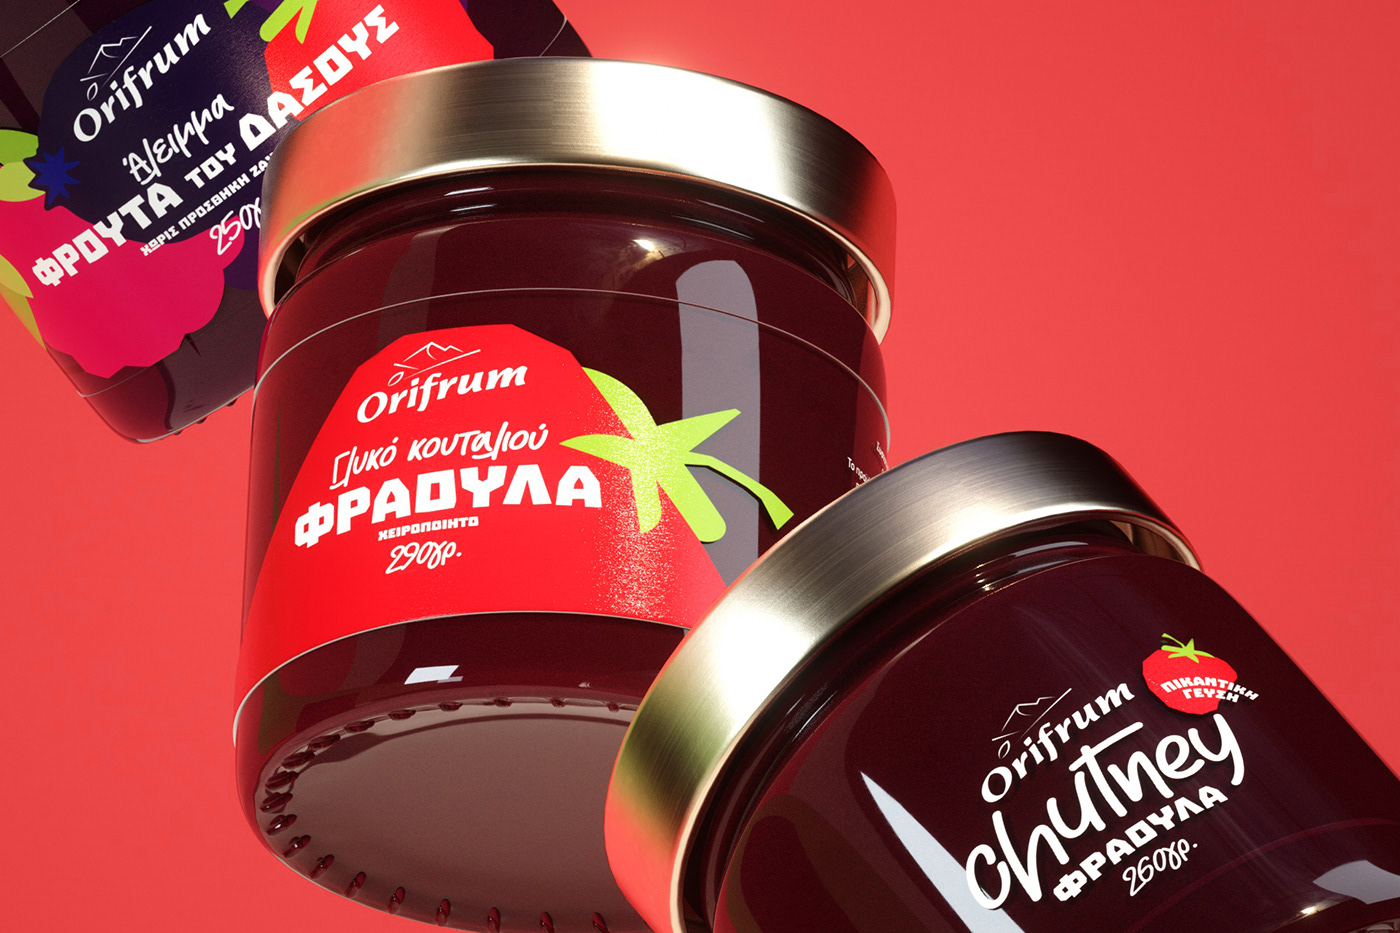 iFrame Design Studio Creates Orifrum Greek Natural Fruit Jam Packaging Design